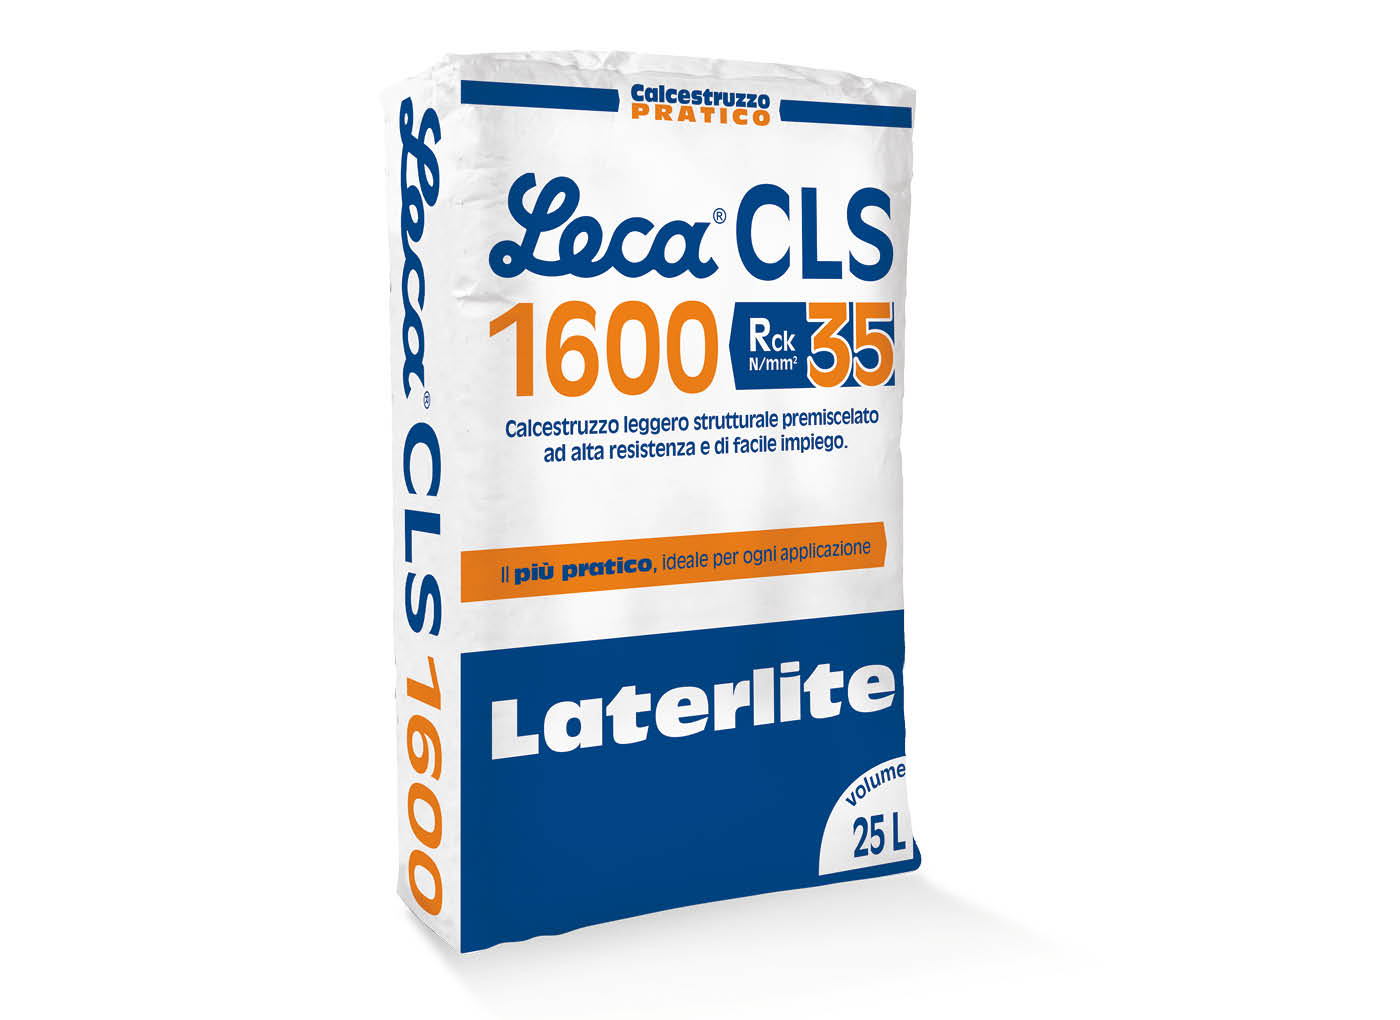 sacco-lecacls-1600-calcestruzzo leggero-strutturale-P23-1